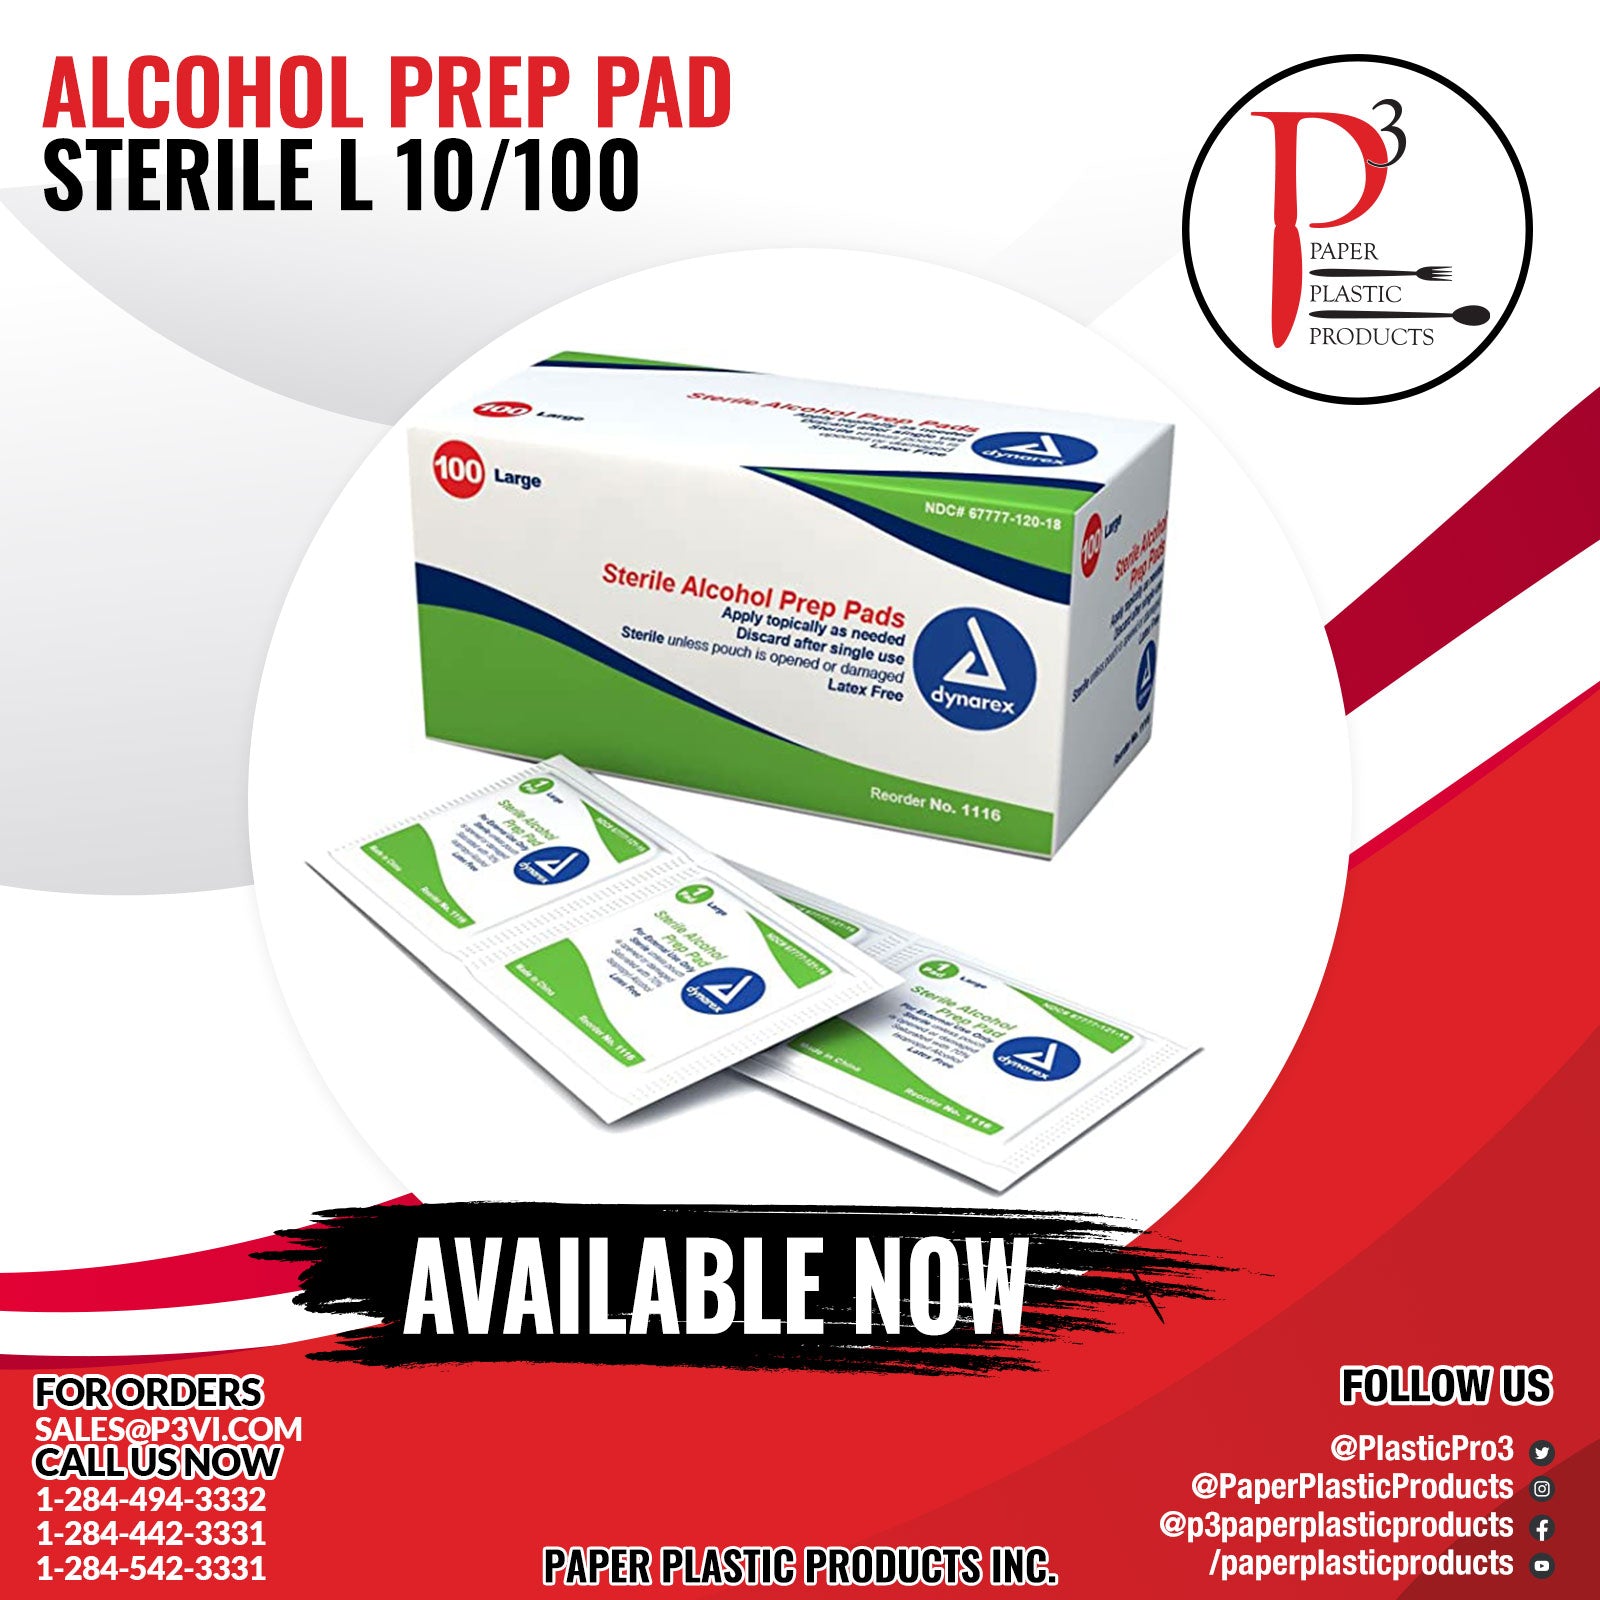 Alcohol Prep Pad Sterile L 10/100